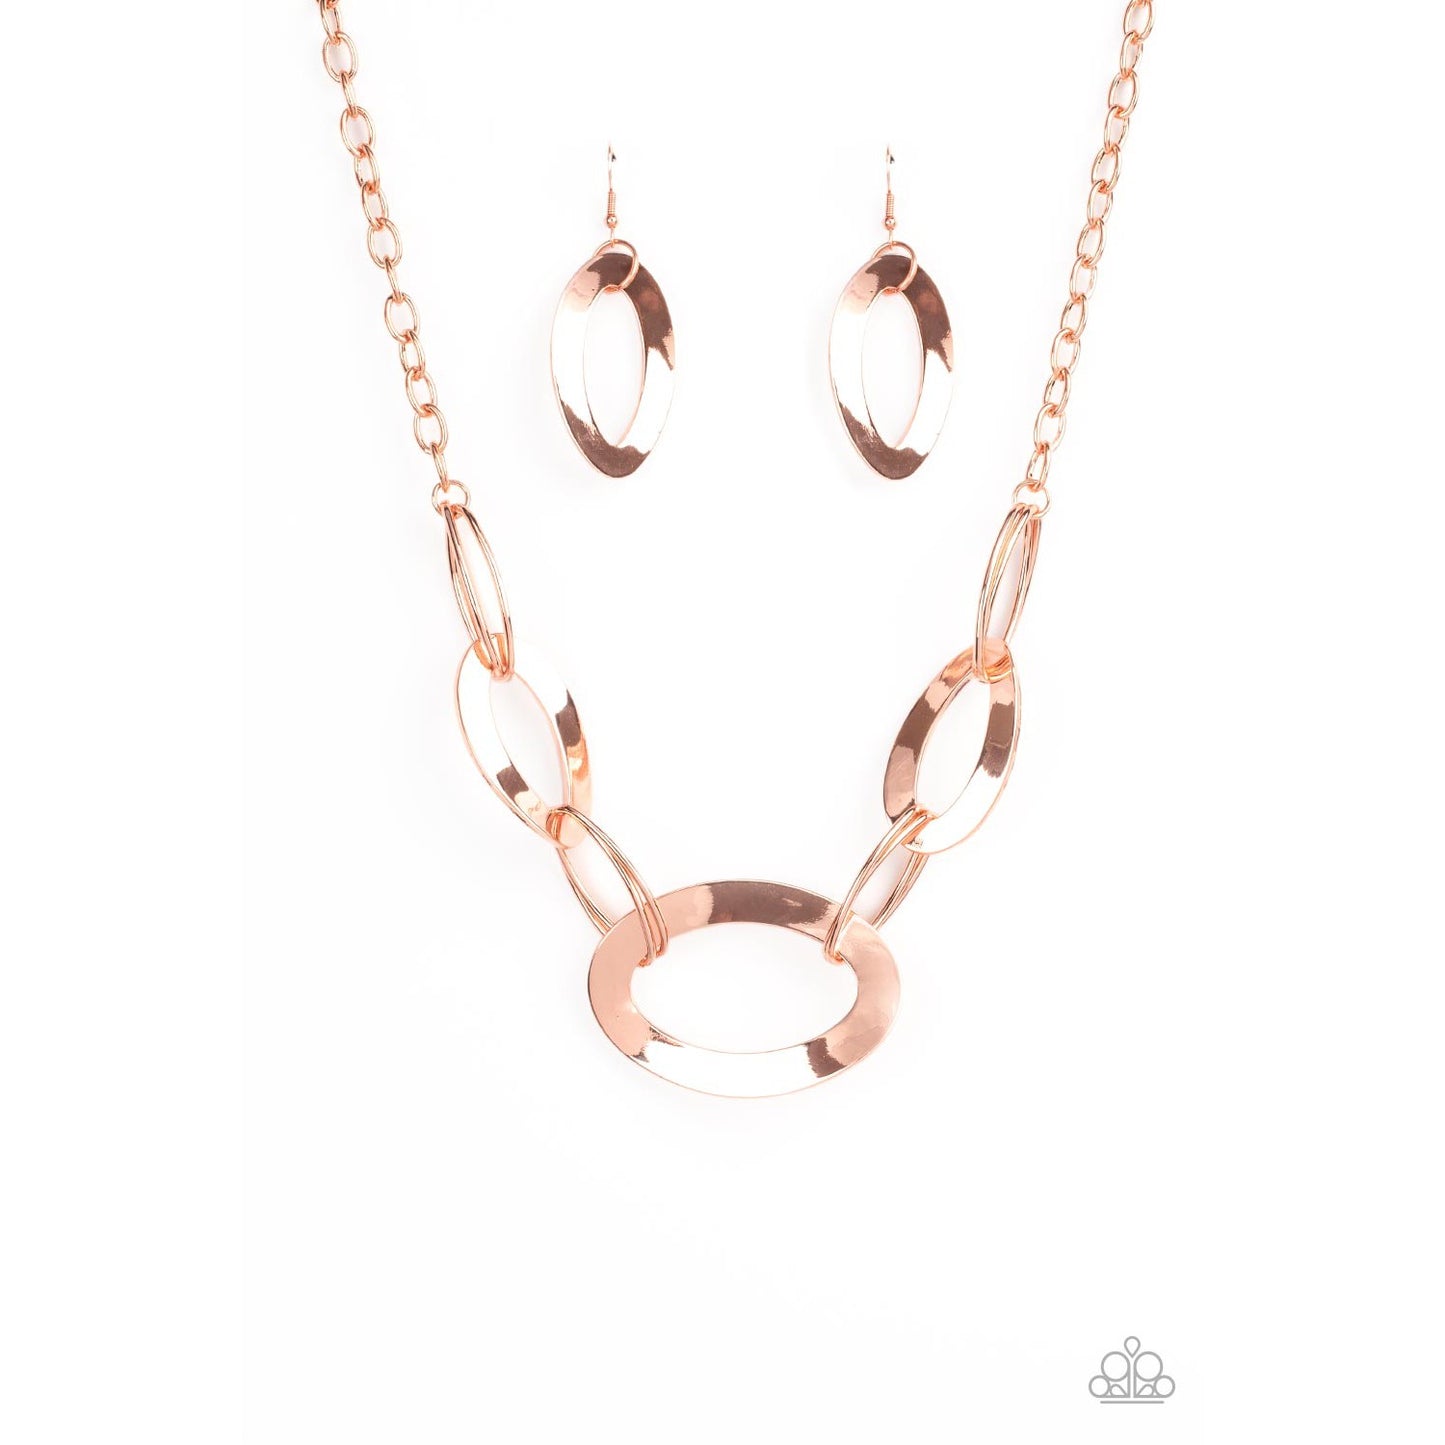 METALHEAD Count - Copper Necklace- rainbowartsreview by Danielle Baker